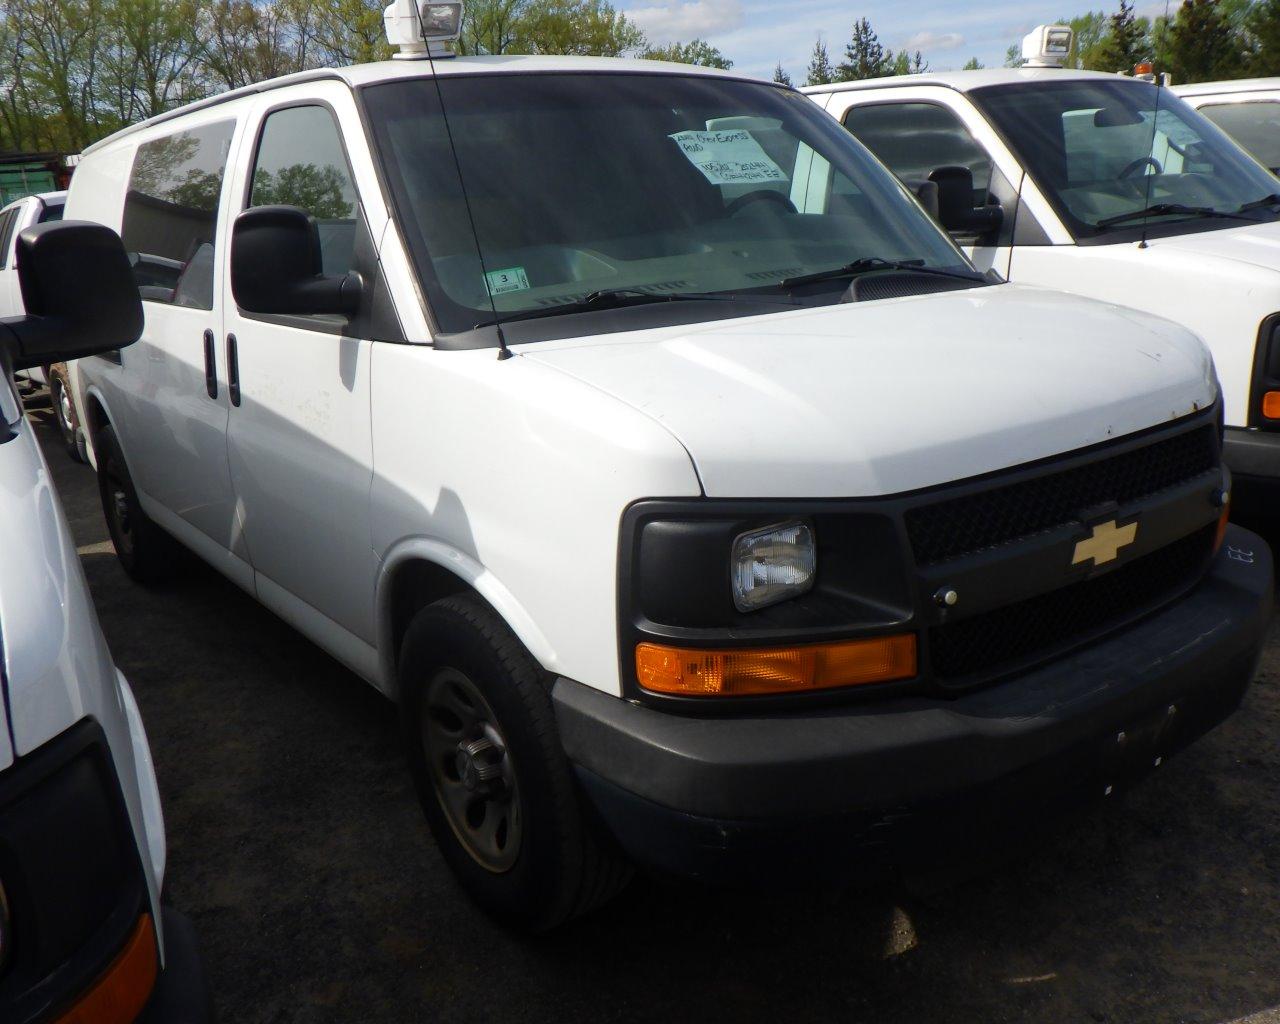 2014 Chevrolet Express Cargo Van   AWD s/n:202441